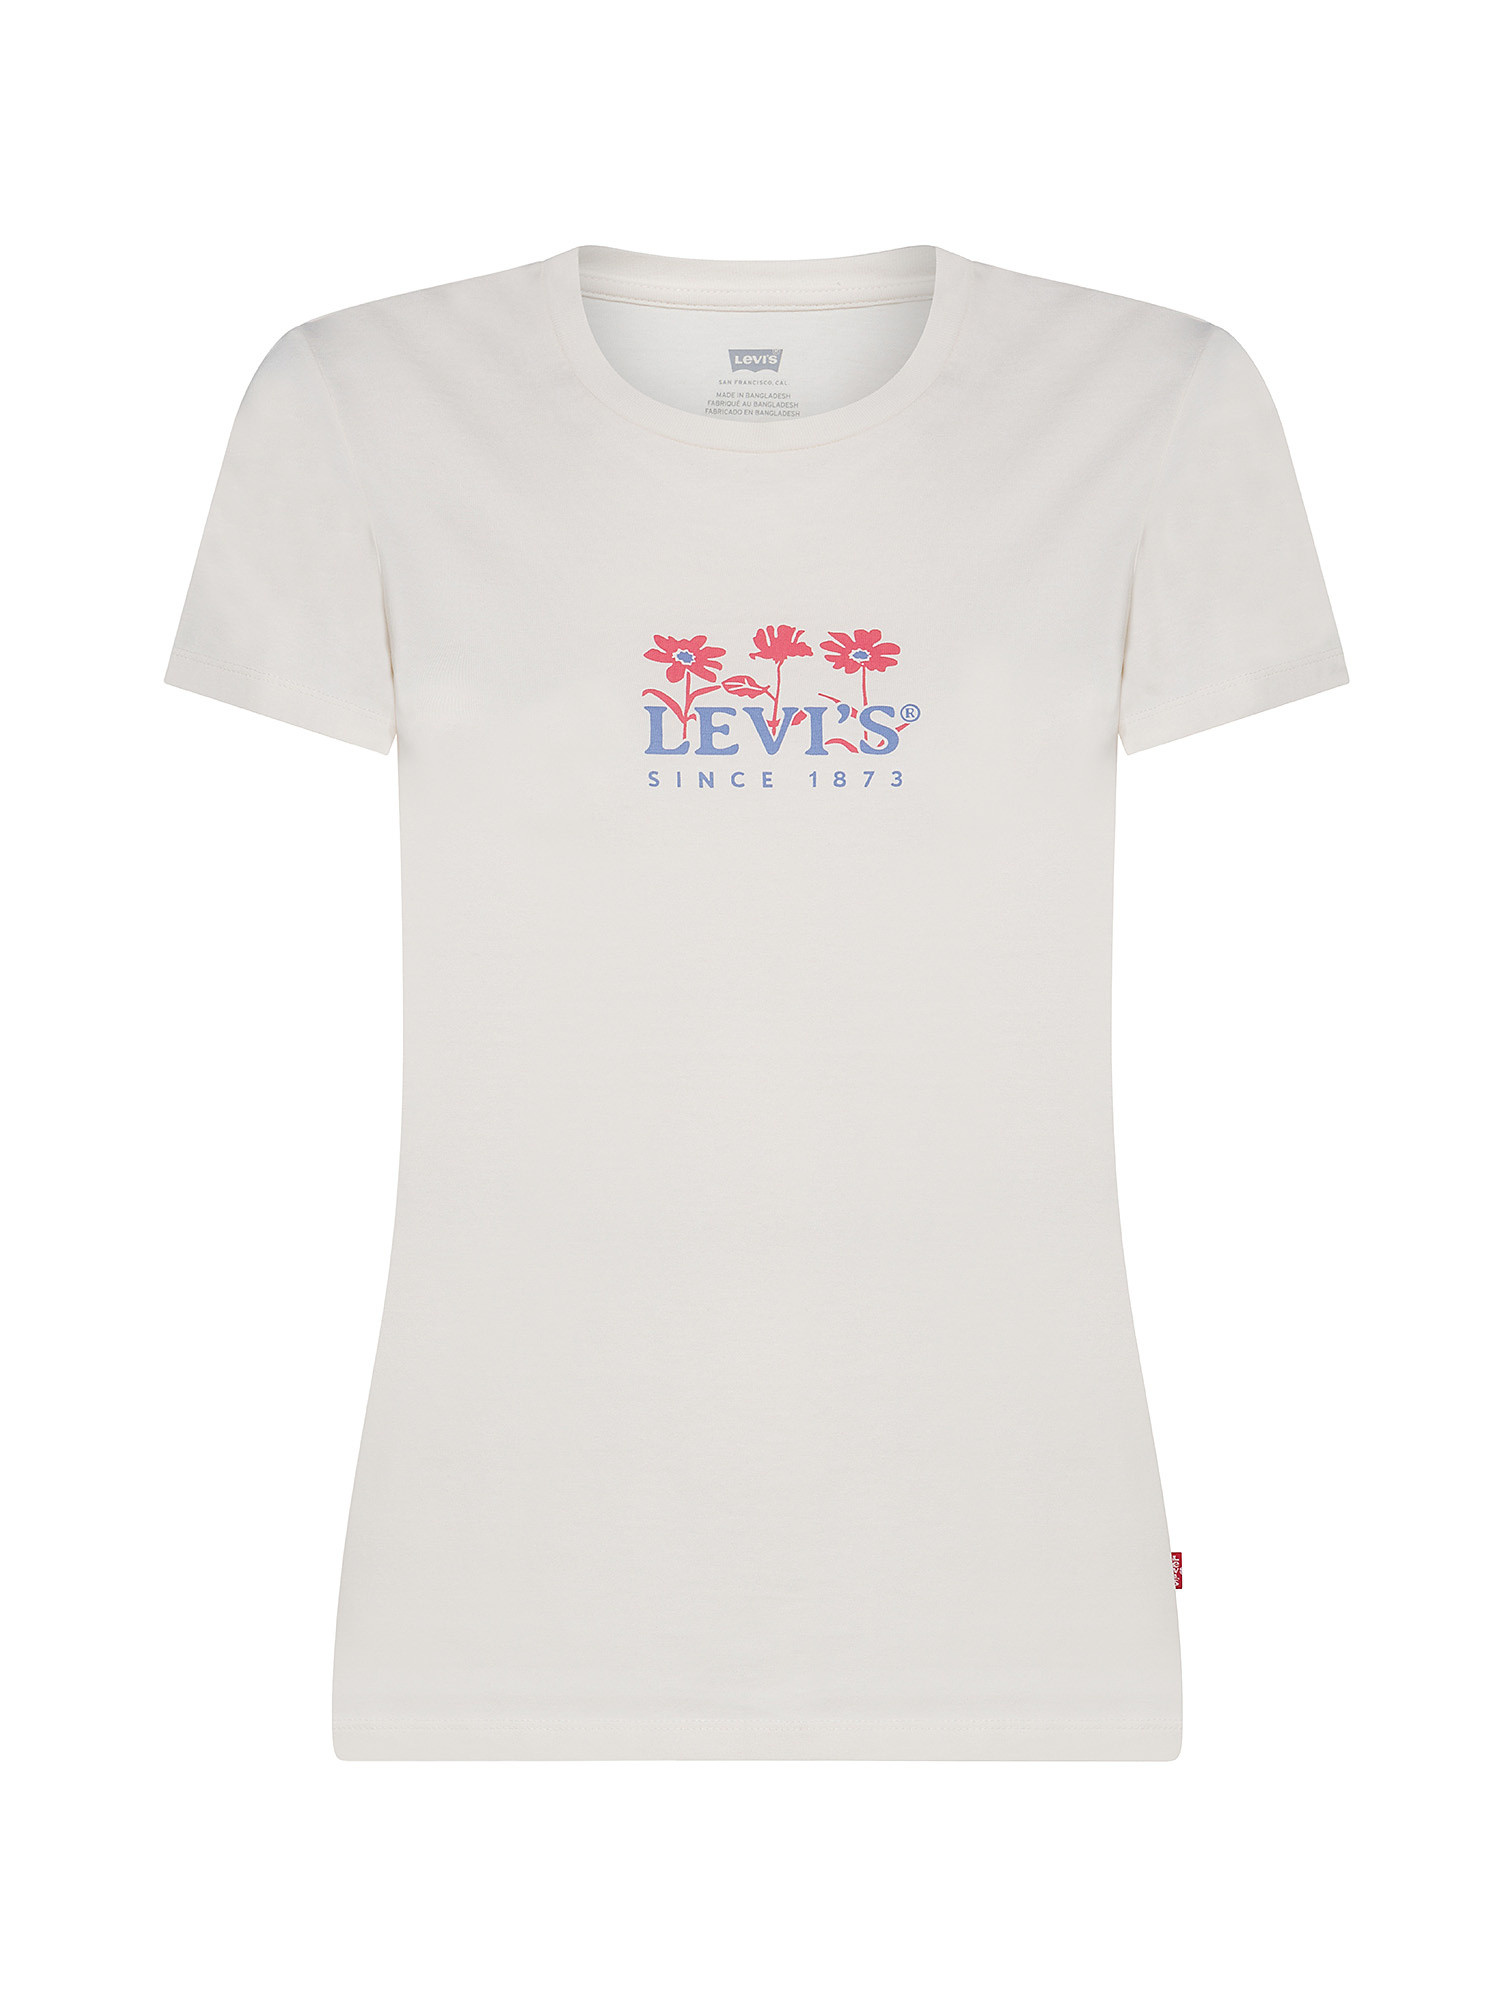 Levi's - T-shirt con logo floreale, Bianco, large image number 0